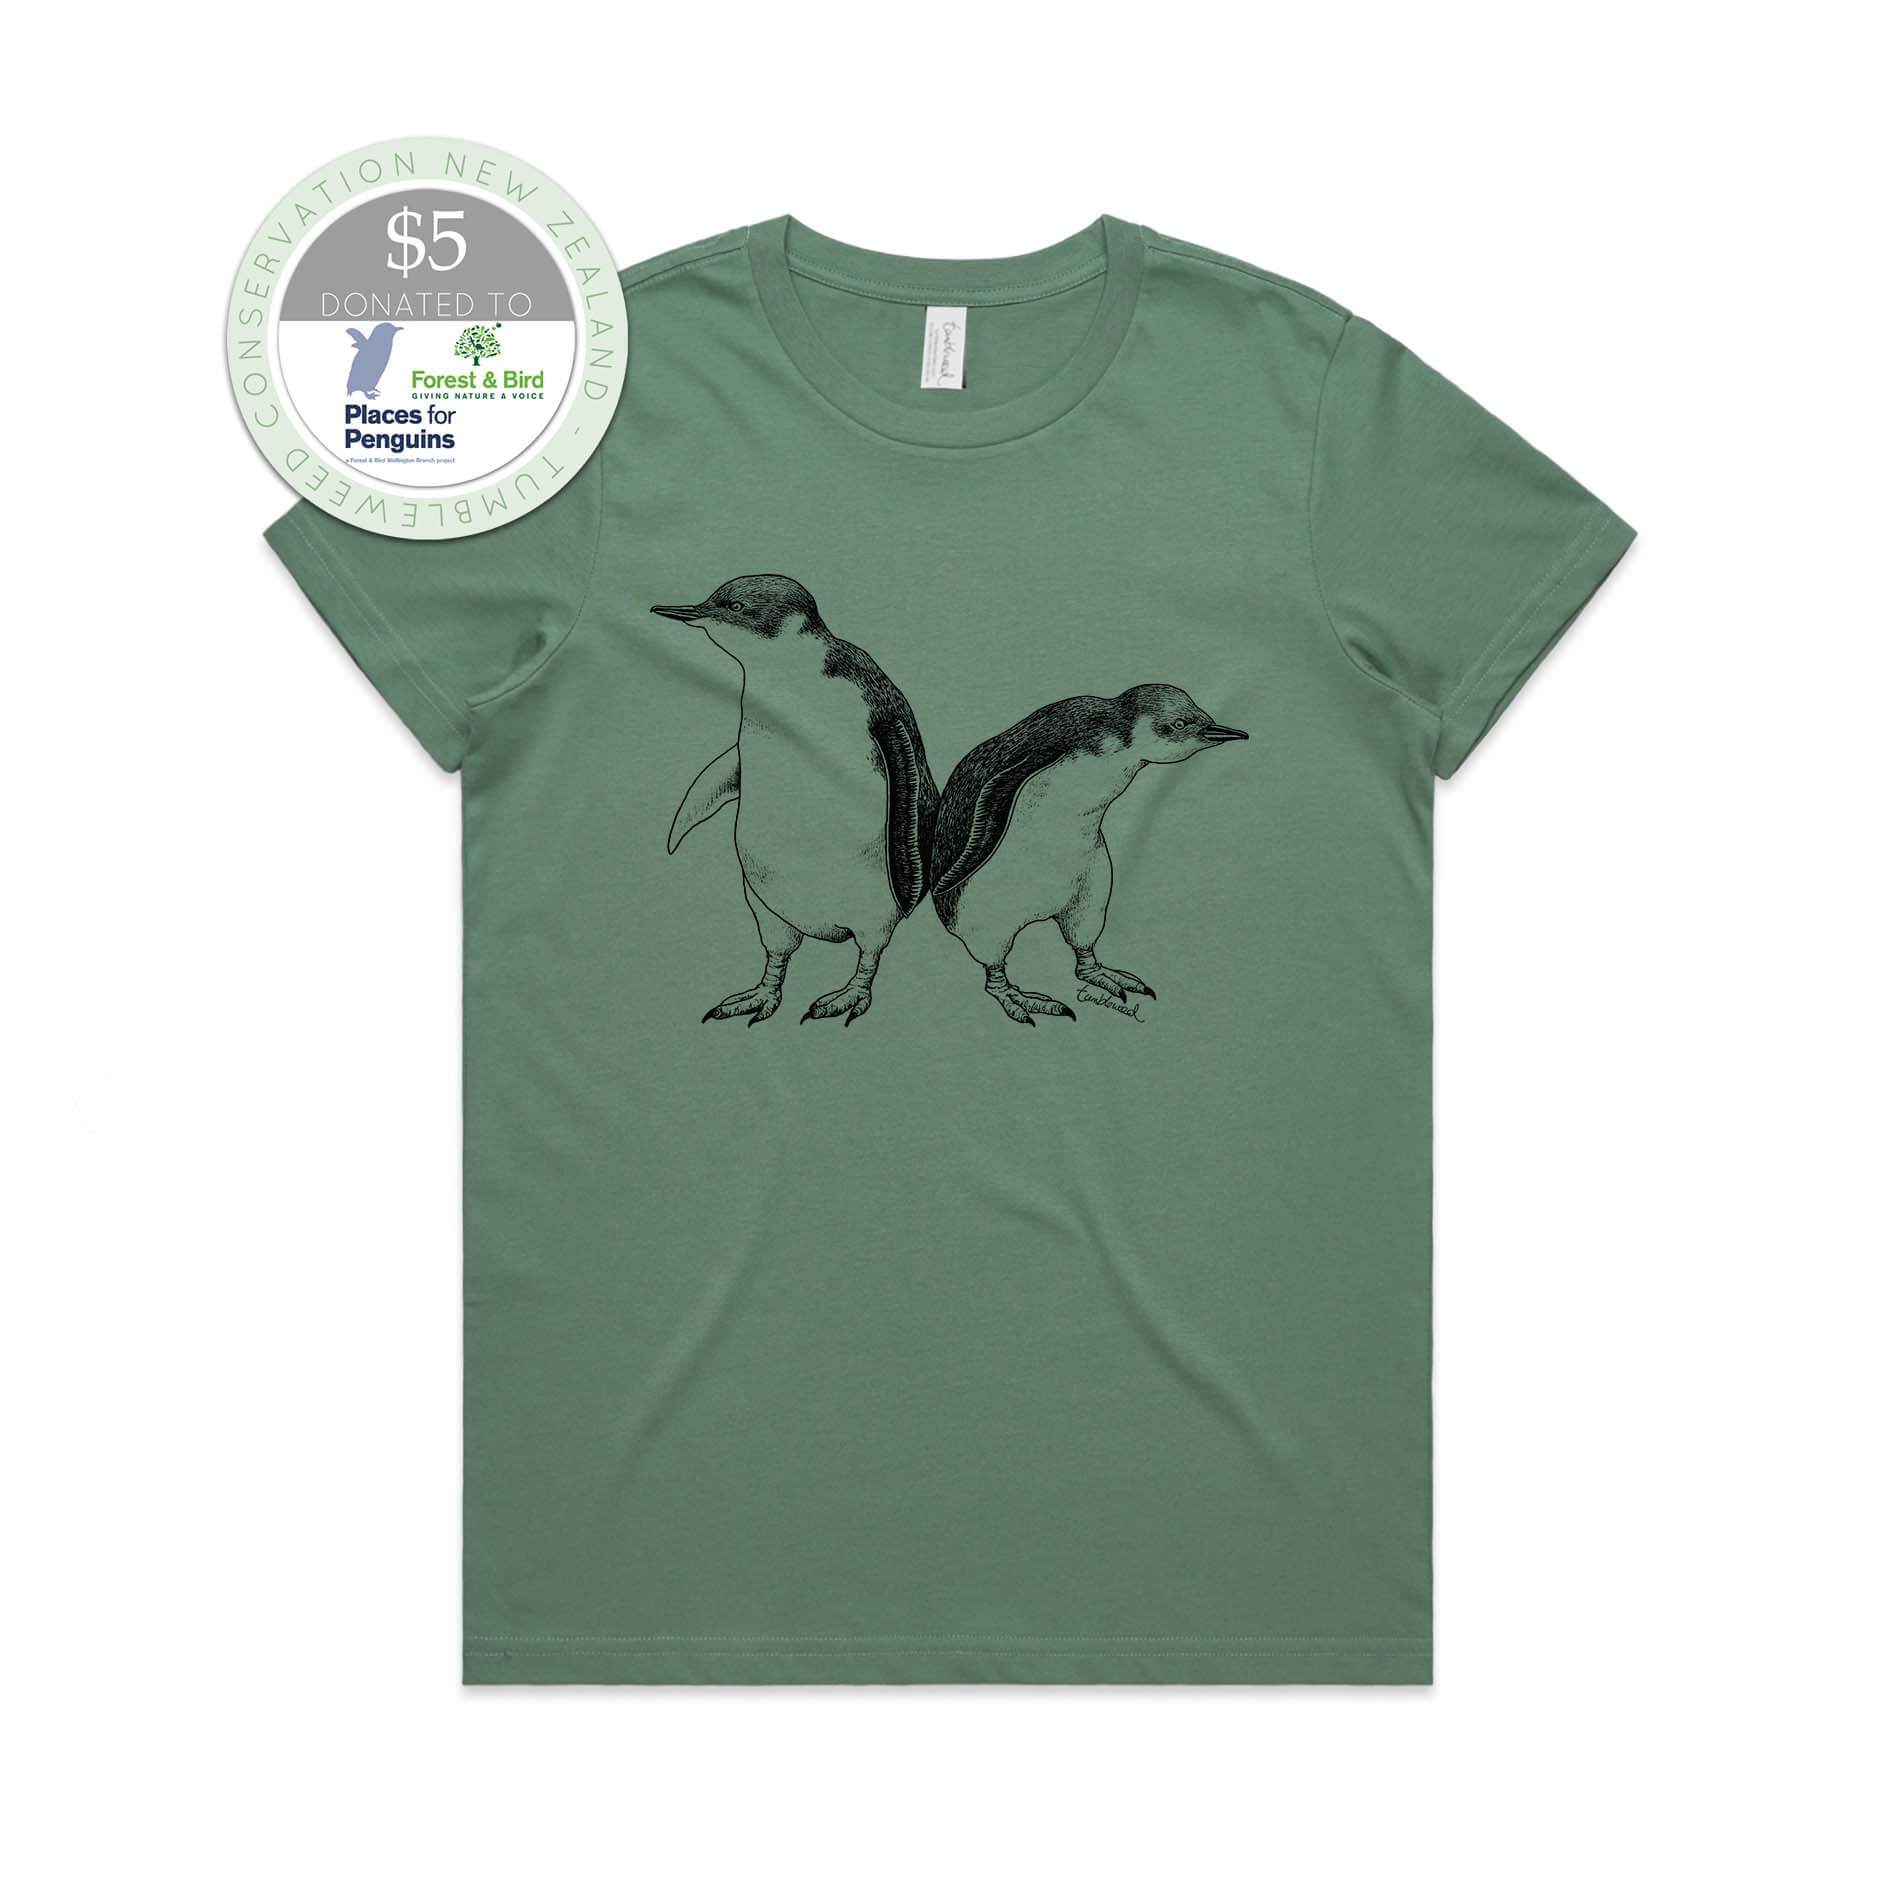 Sage, female t-shirt featuring a screen printed Little Blue Penguin design.